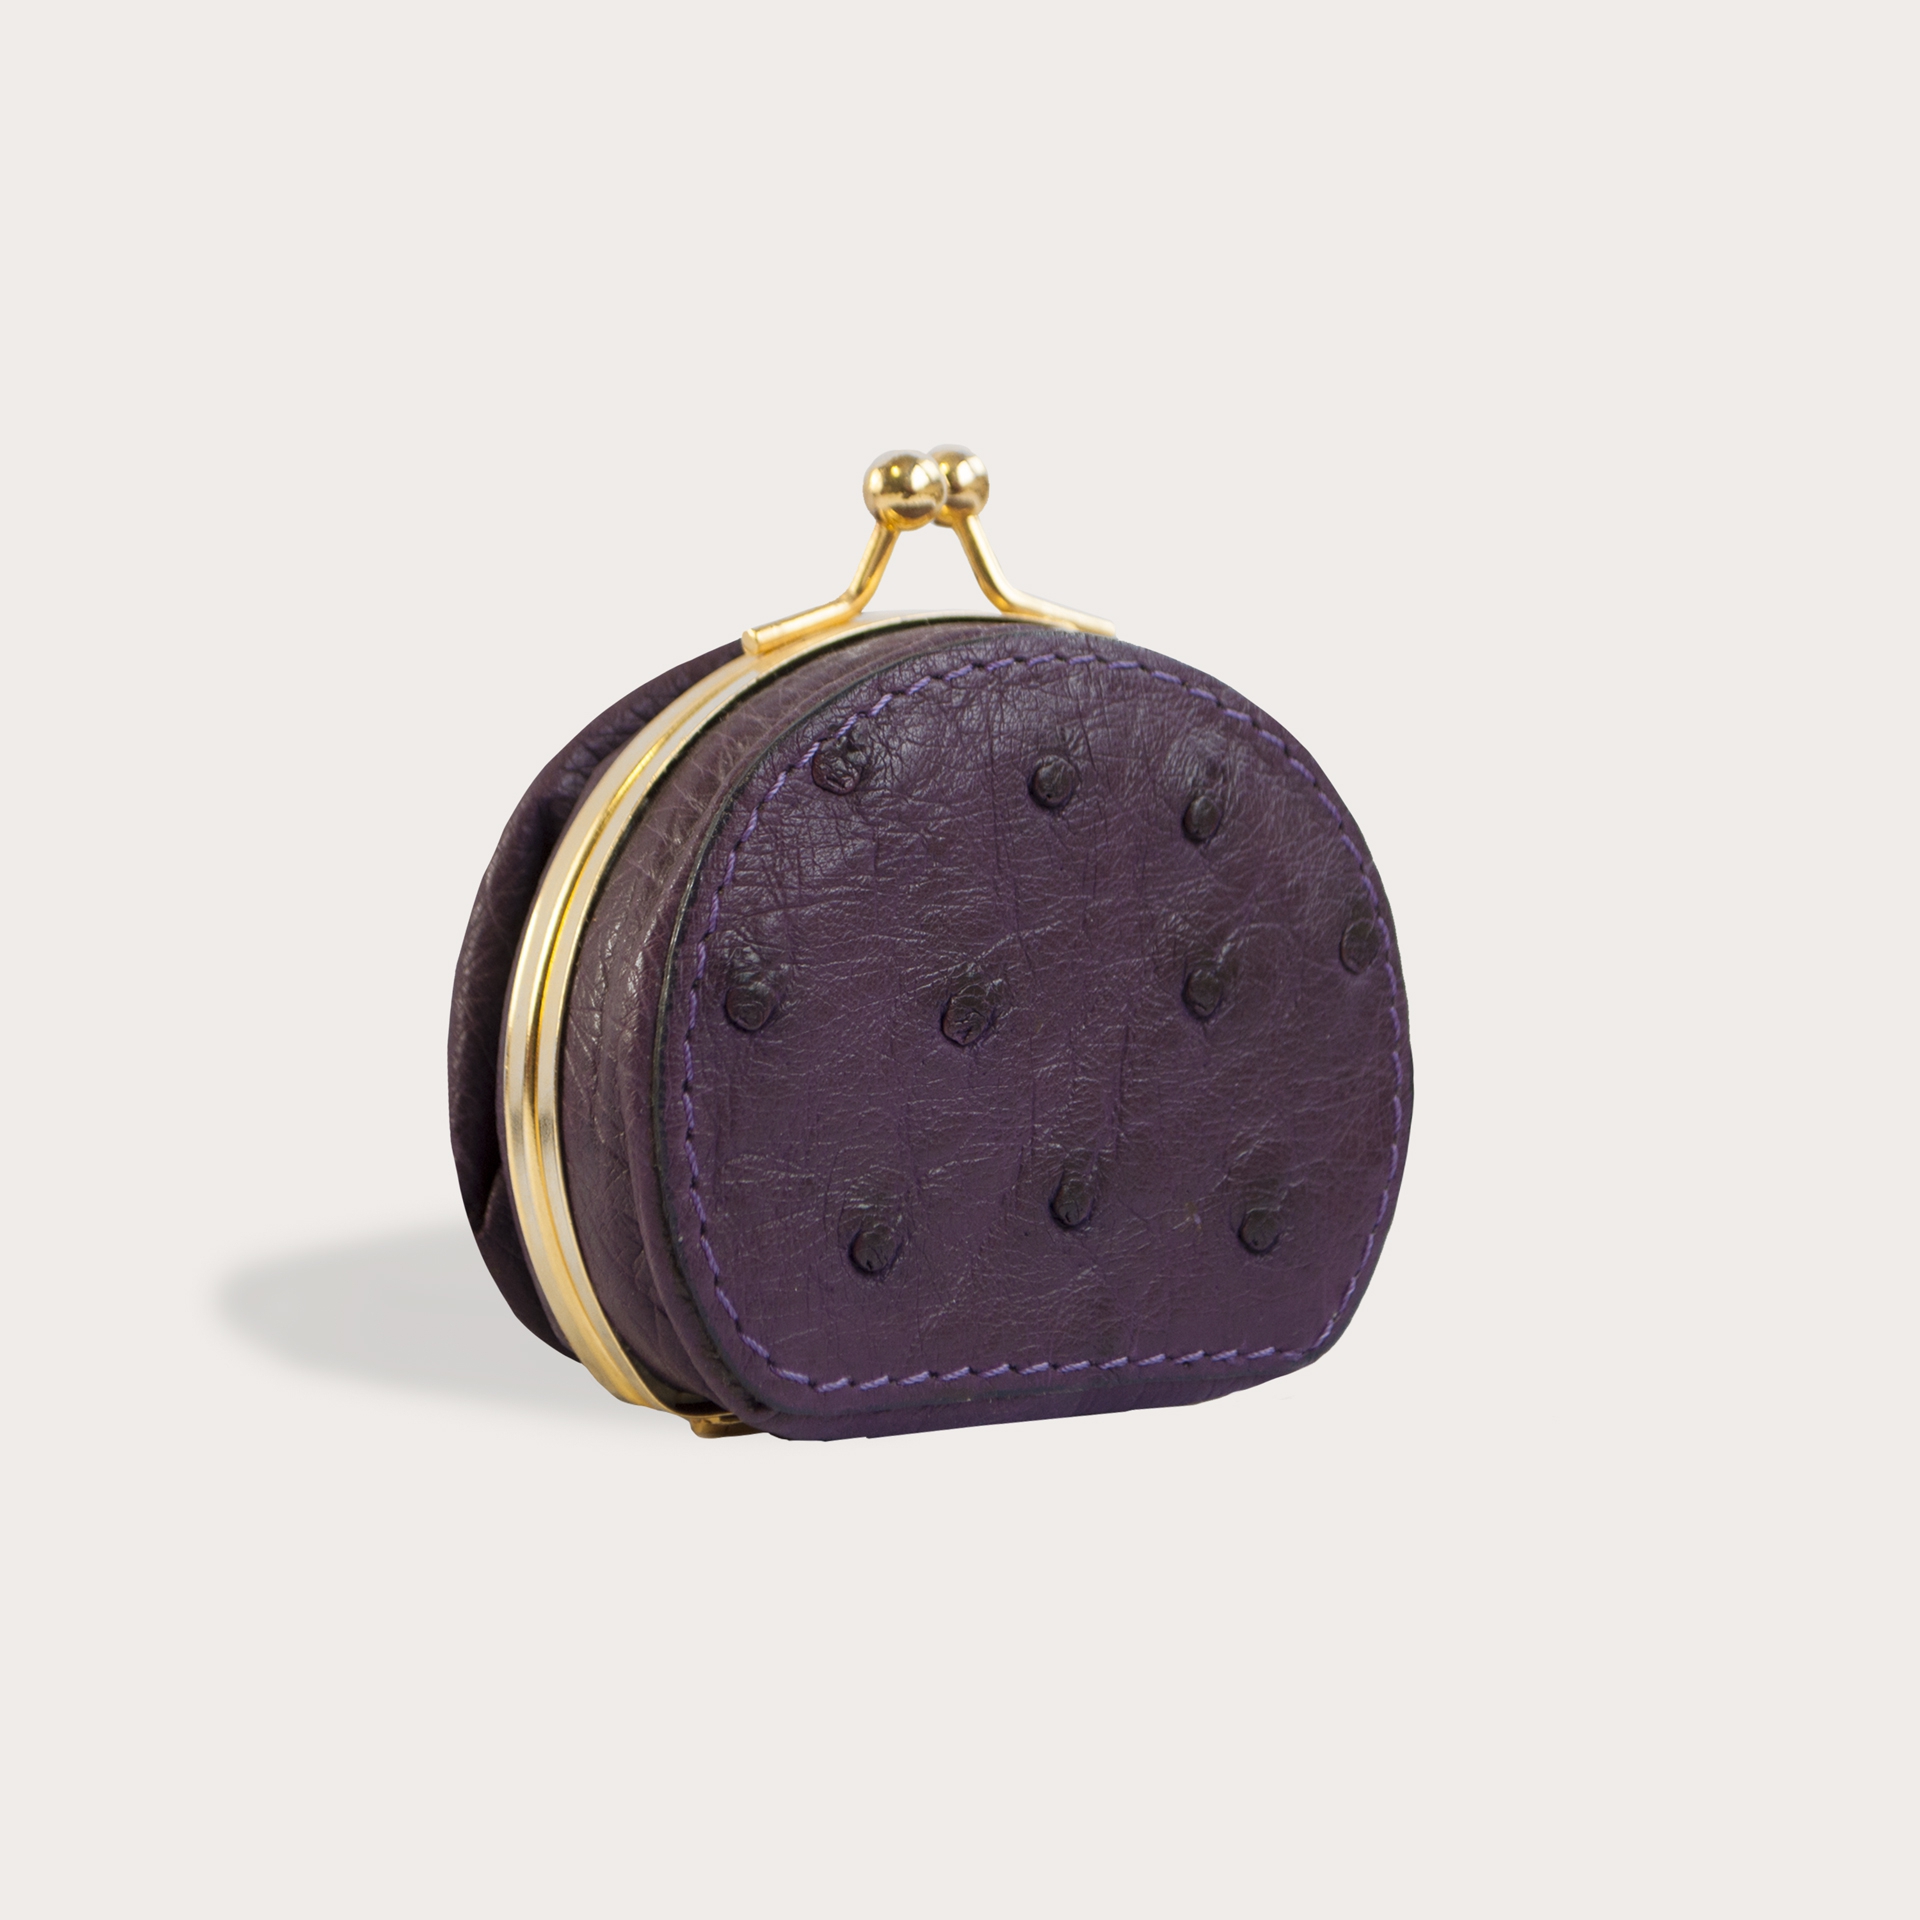 Authentic Louis Vuitton 'Squares' zipper closure handbag